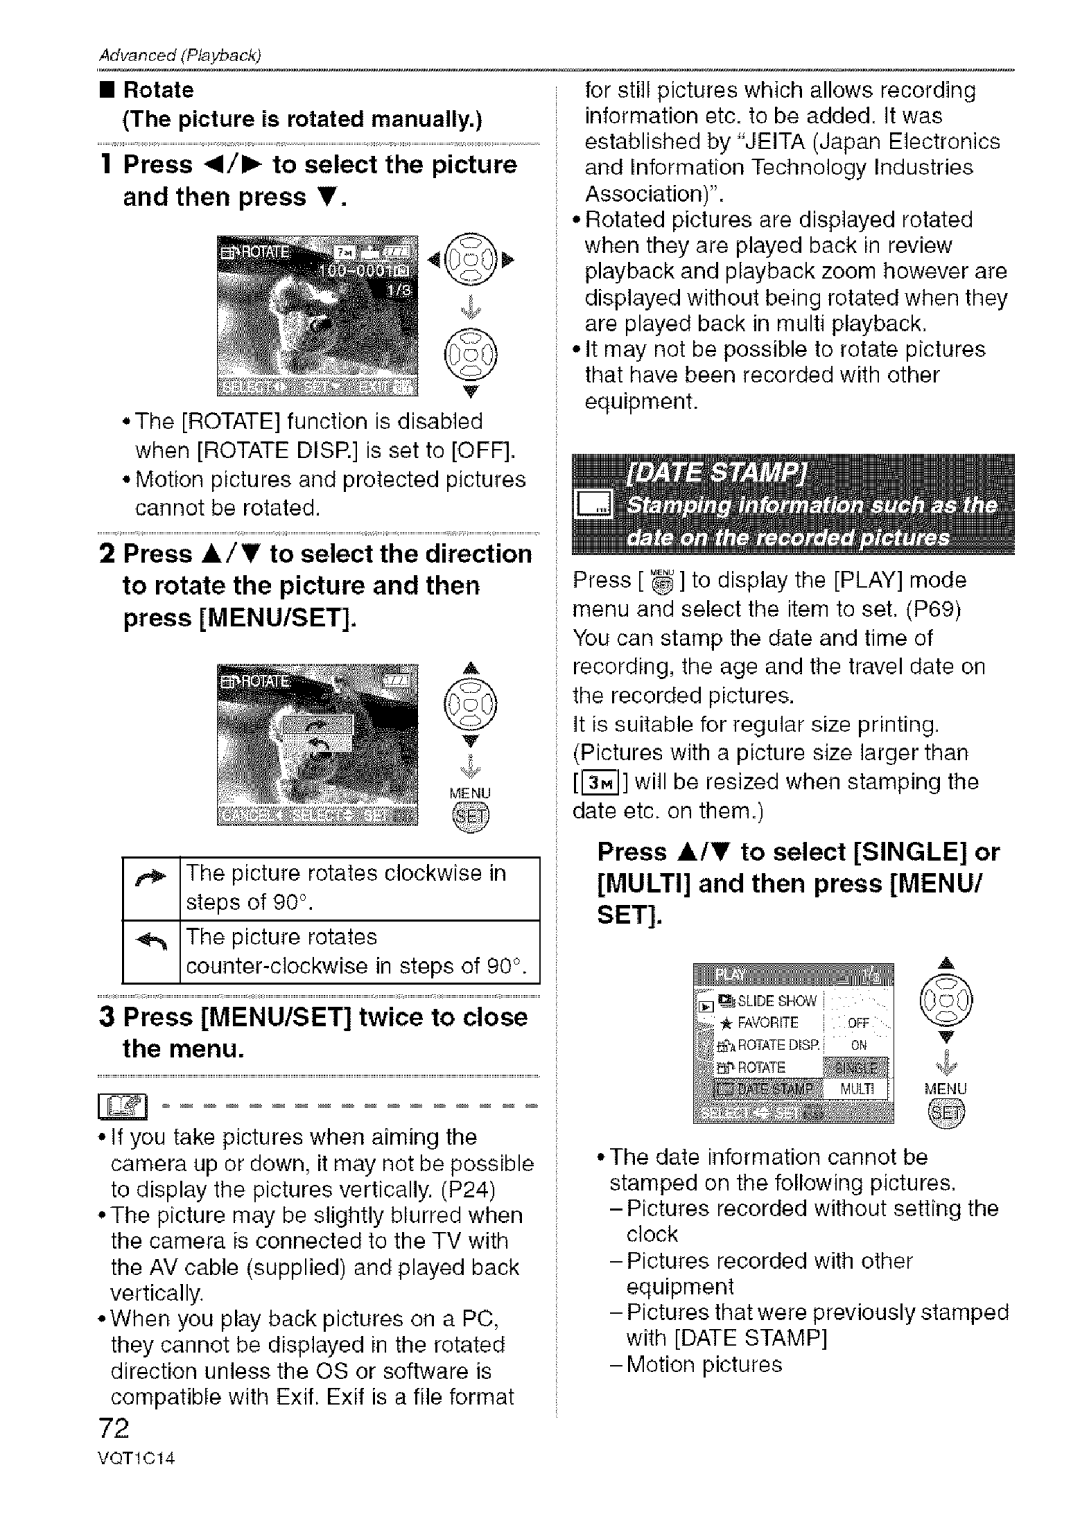 Panasonic DMC-FX12, DMC-FX10 operating instructions Press MENU/SET twice to close the menu, Multi and then press Menu, Set 